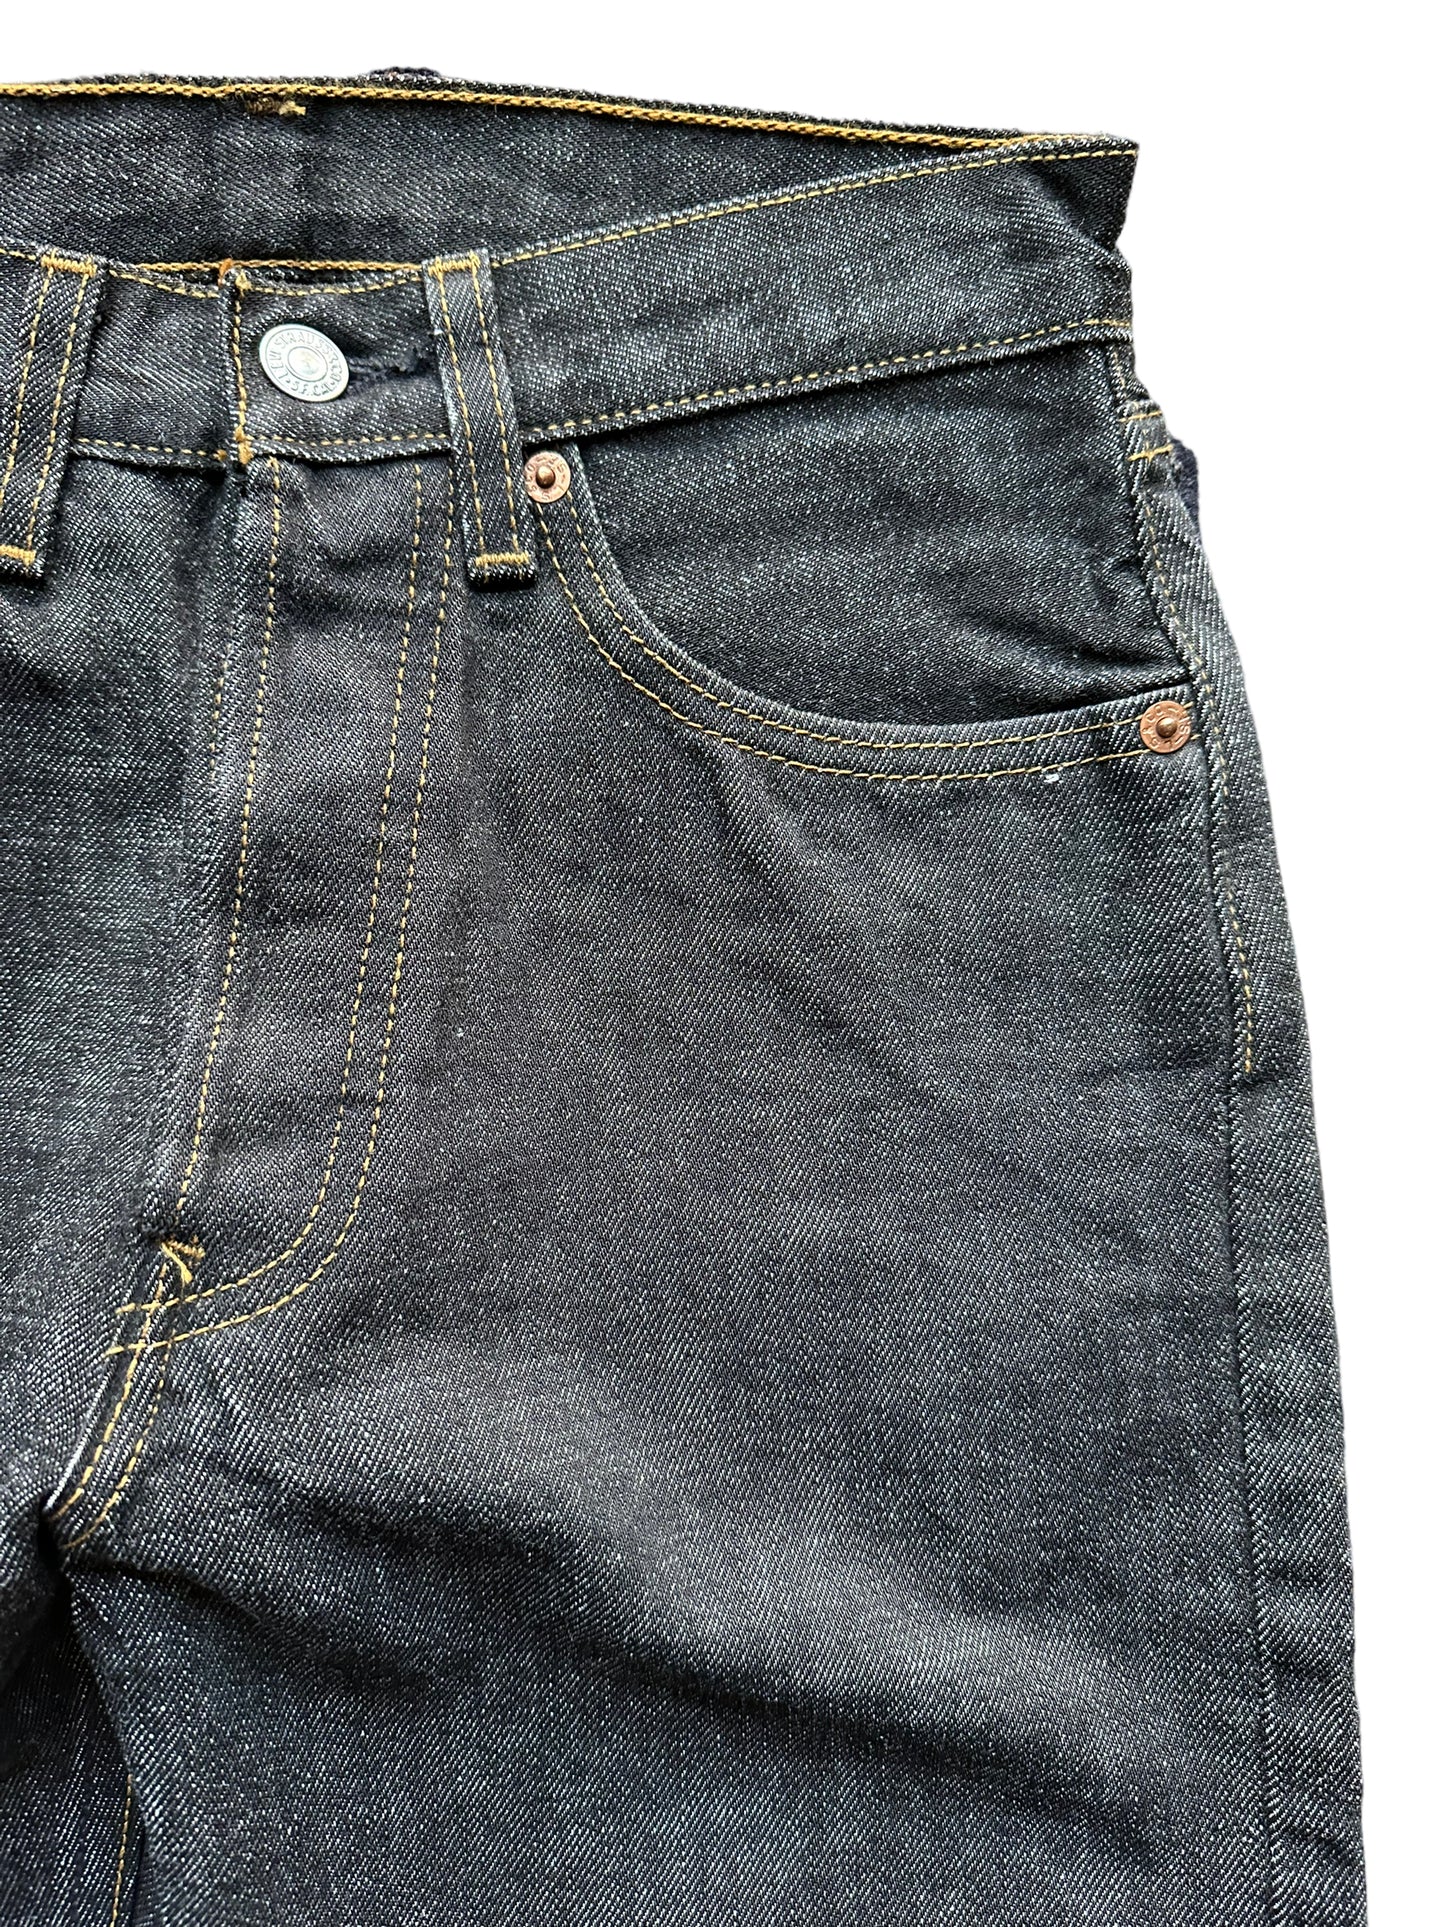 Front left side waist of Deadstock 90s USA Levi's 501 Black Jeans 26x33 | Seattle Deadstock Vintage Jeans | Barn Owl Vintage Denim